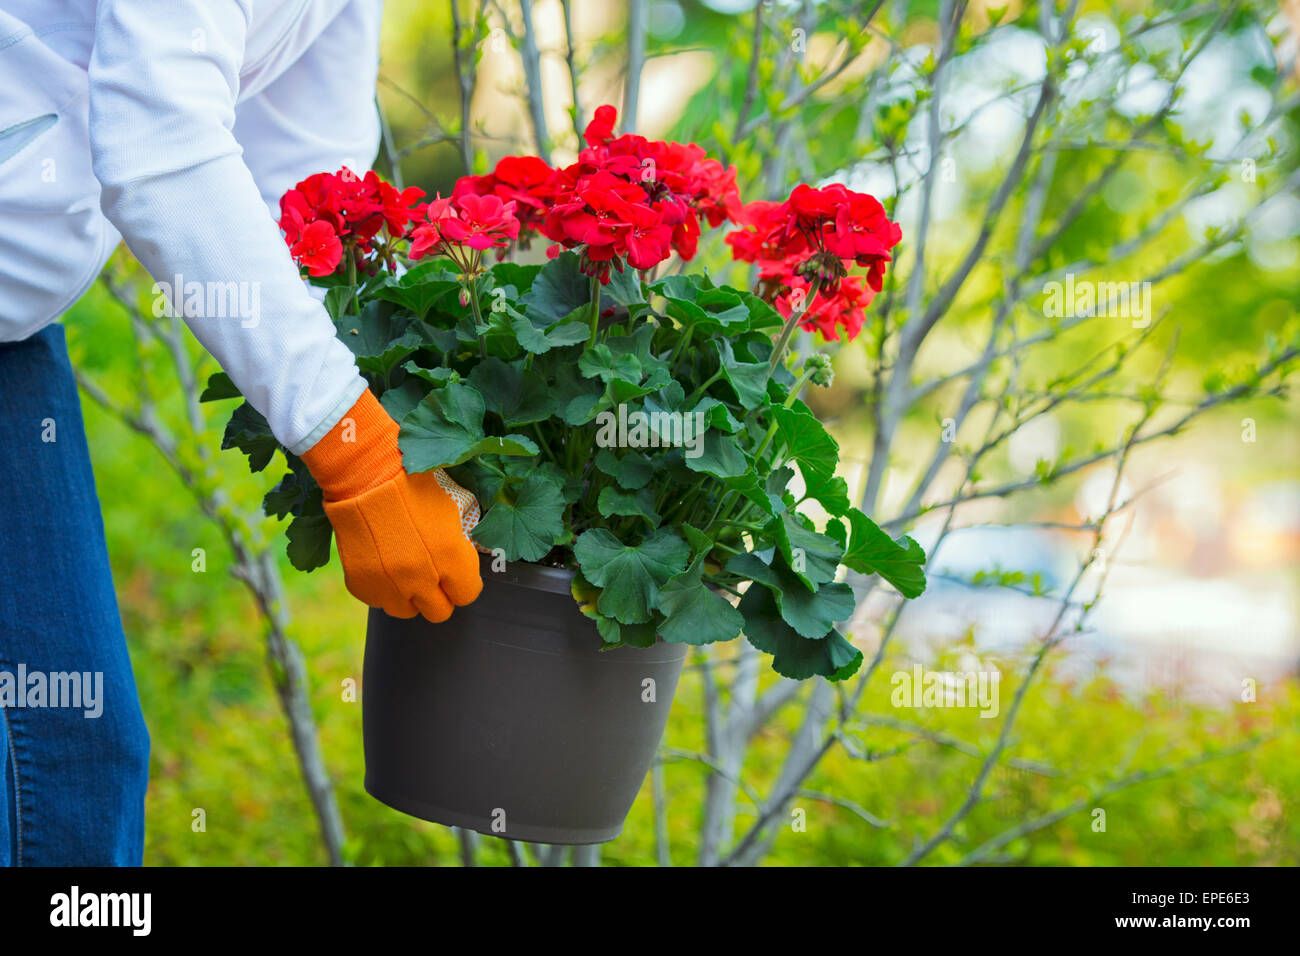 Geranium Plant, Pot, Potted Geranium, Woman Gardening holding, lifting Plant Red Geraniums Flowers Stock Photo